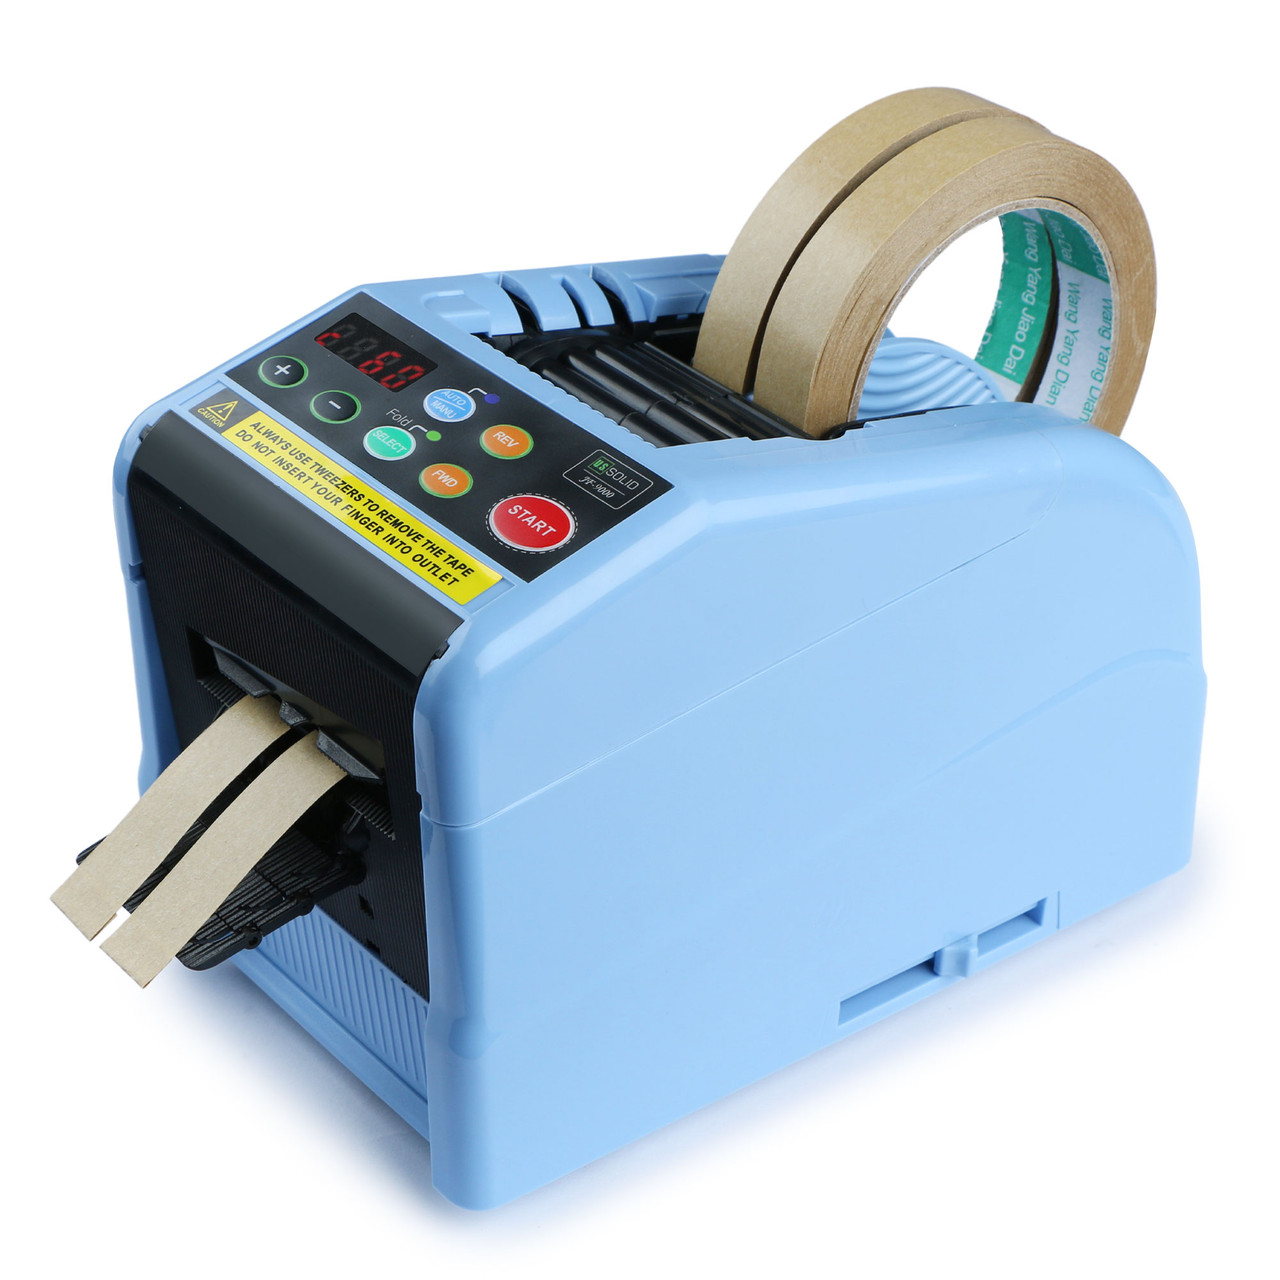 U.S. Solid Automatic Tape Dispenser JF-6000, 3 inch Tape Width - U.S. Solid